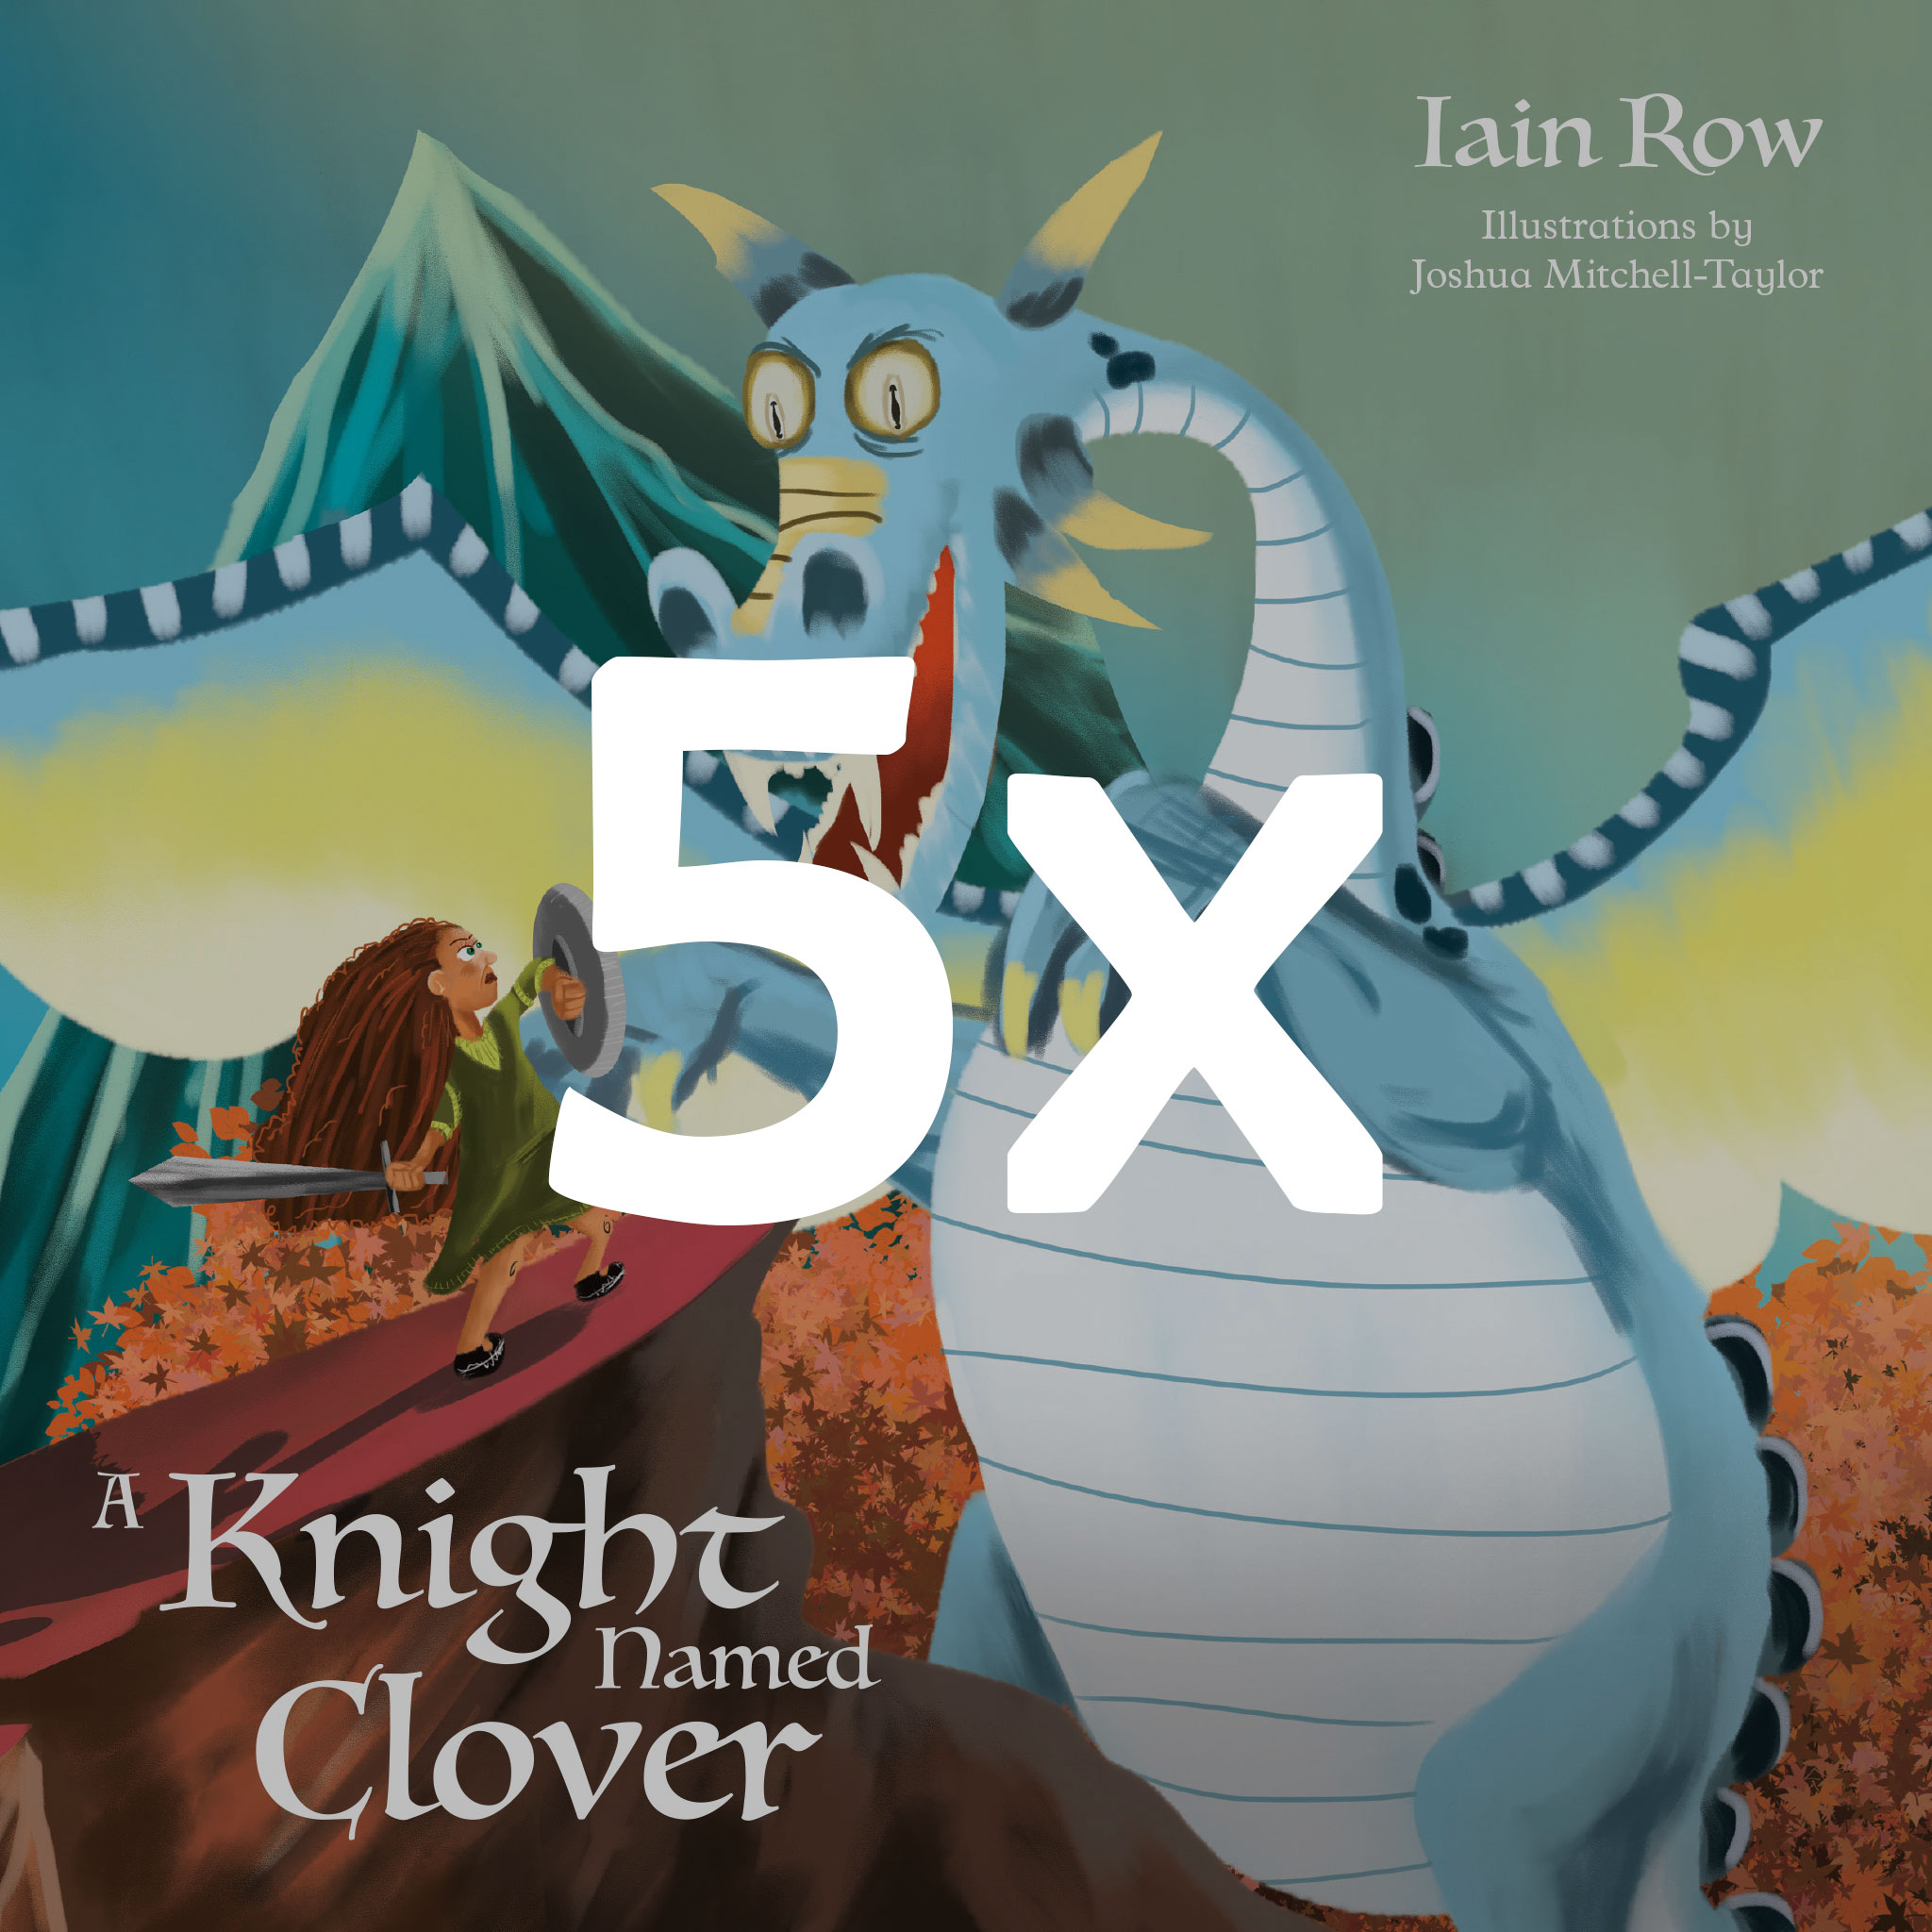 Bulk Order: 5 x A Knight Named Clover Books